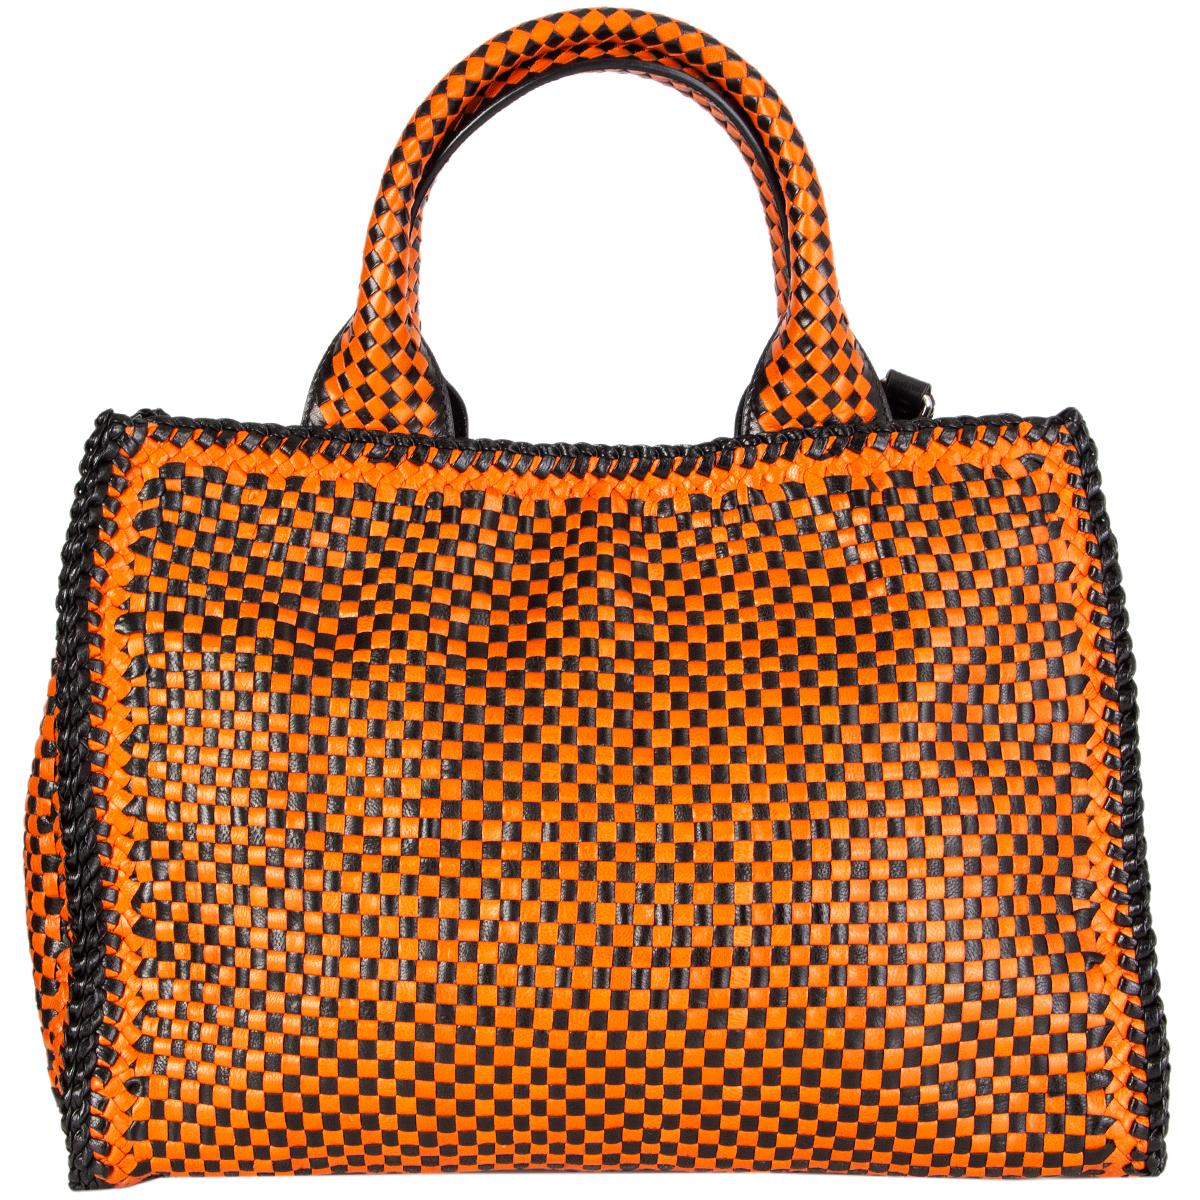 orange and black handbag